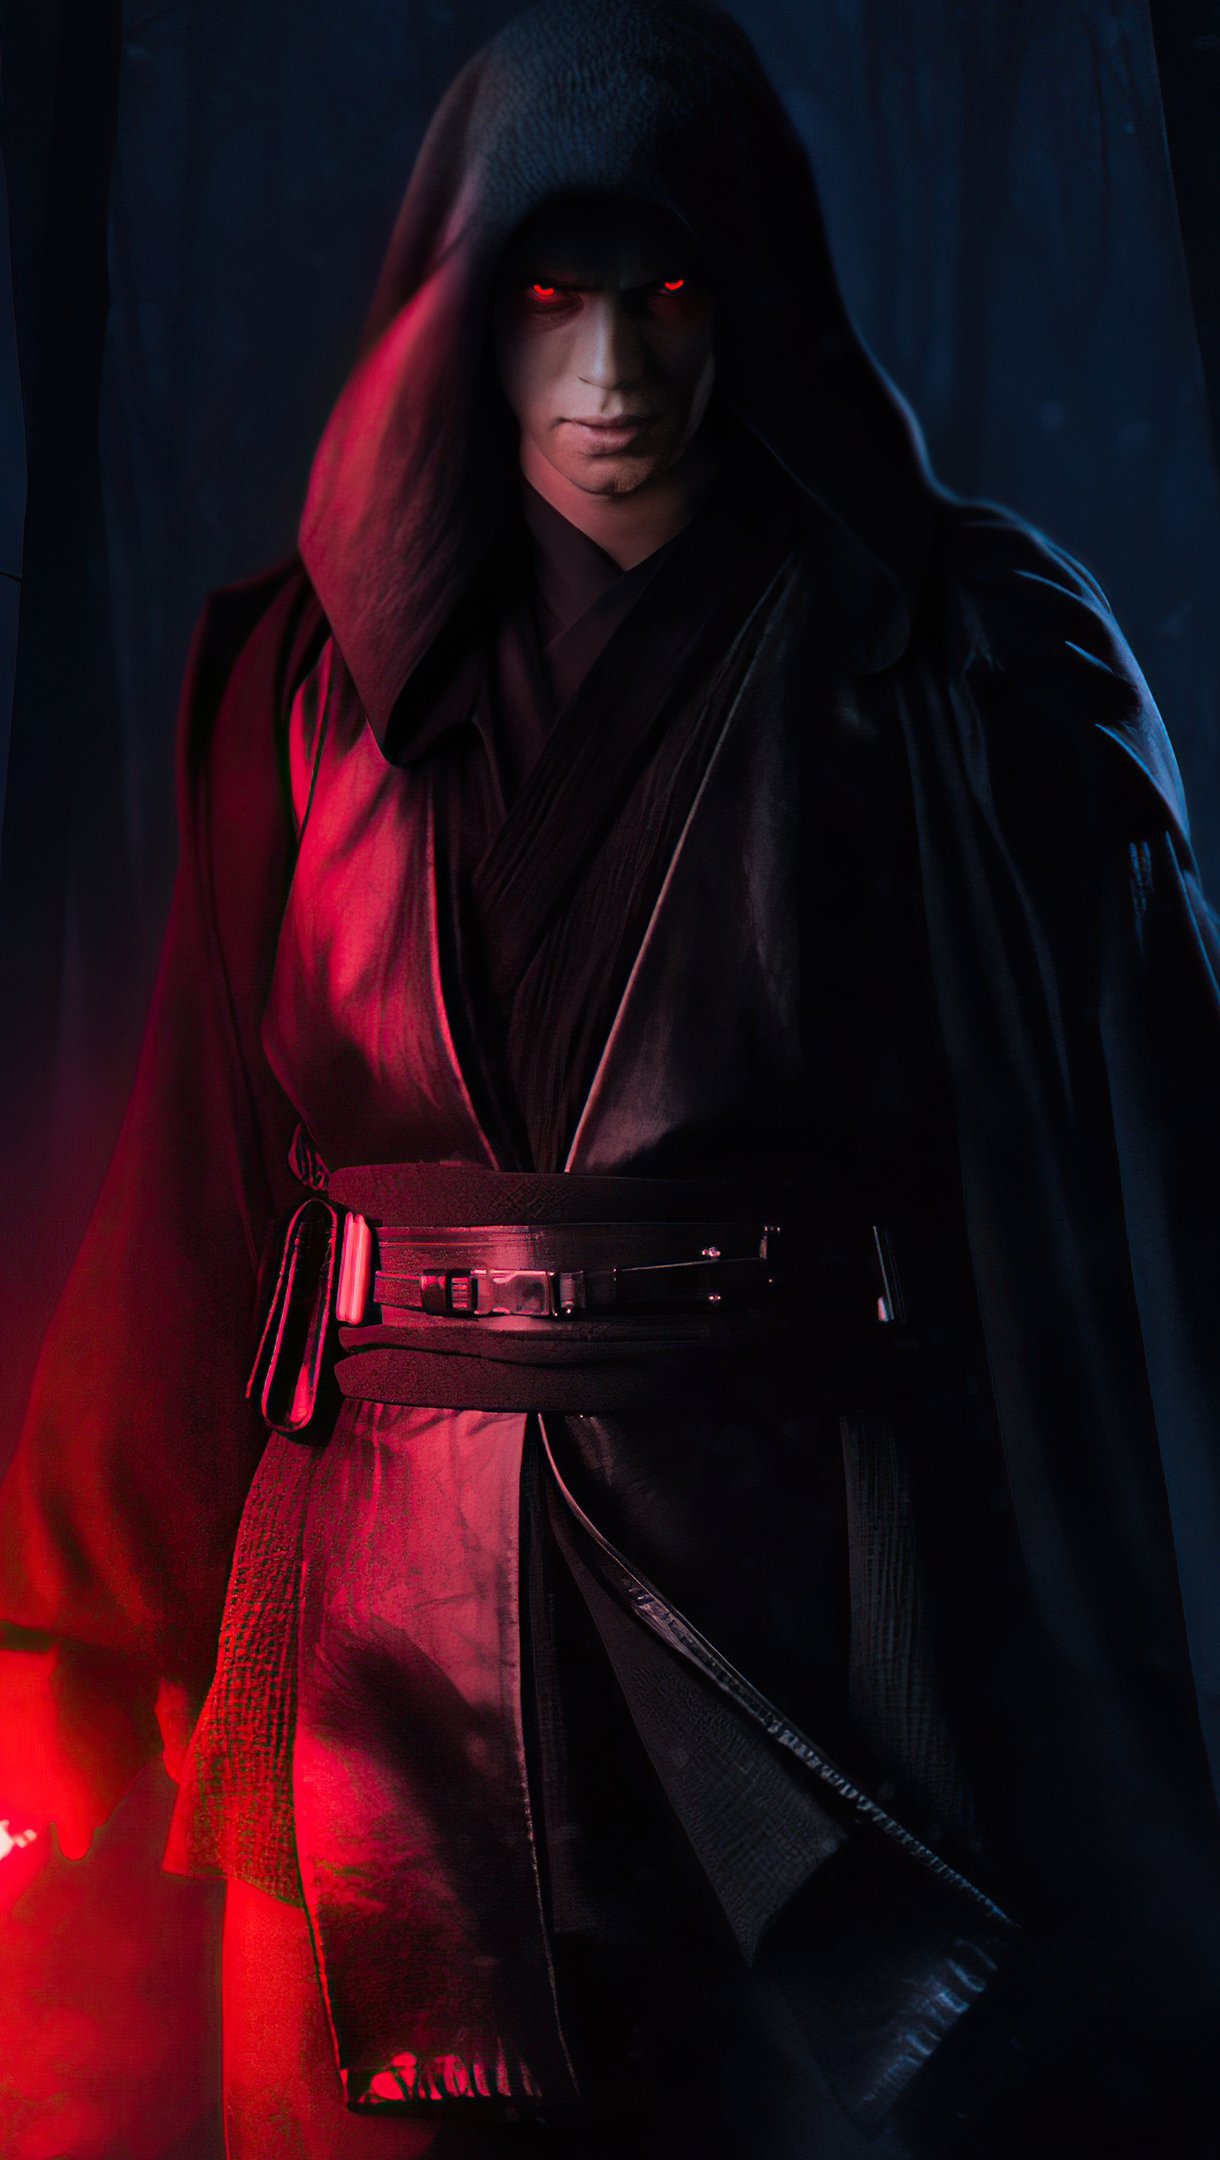 Wallpaper Hayden Christensen as Anakin Skywalker Vertical